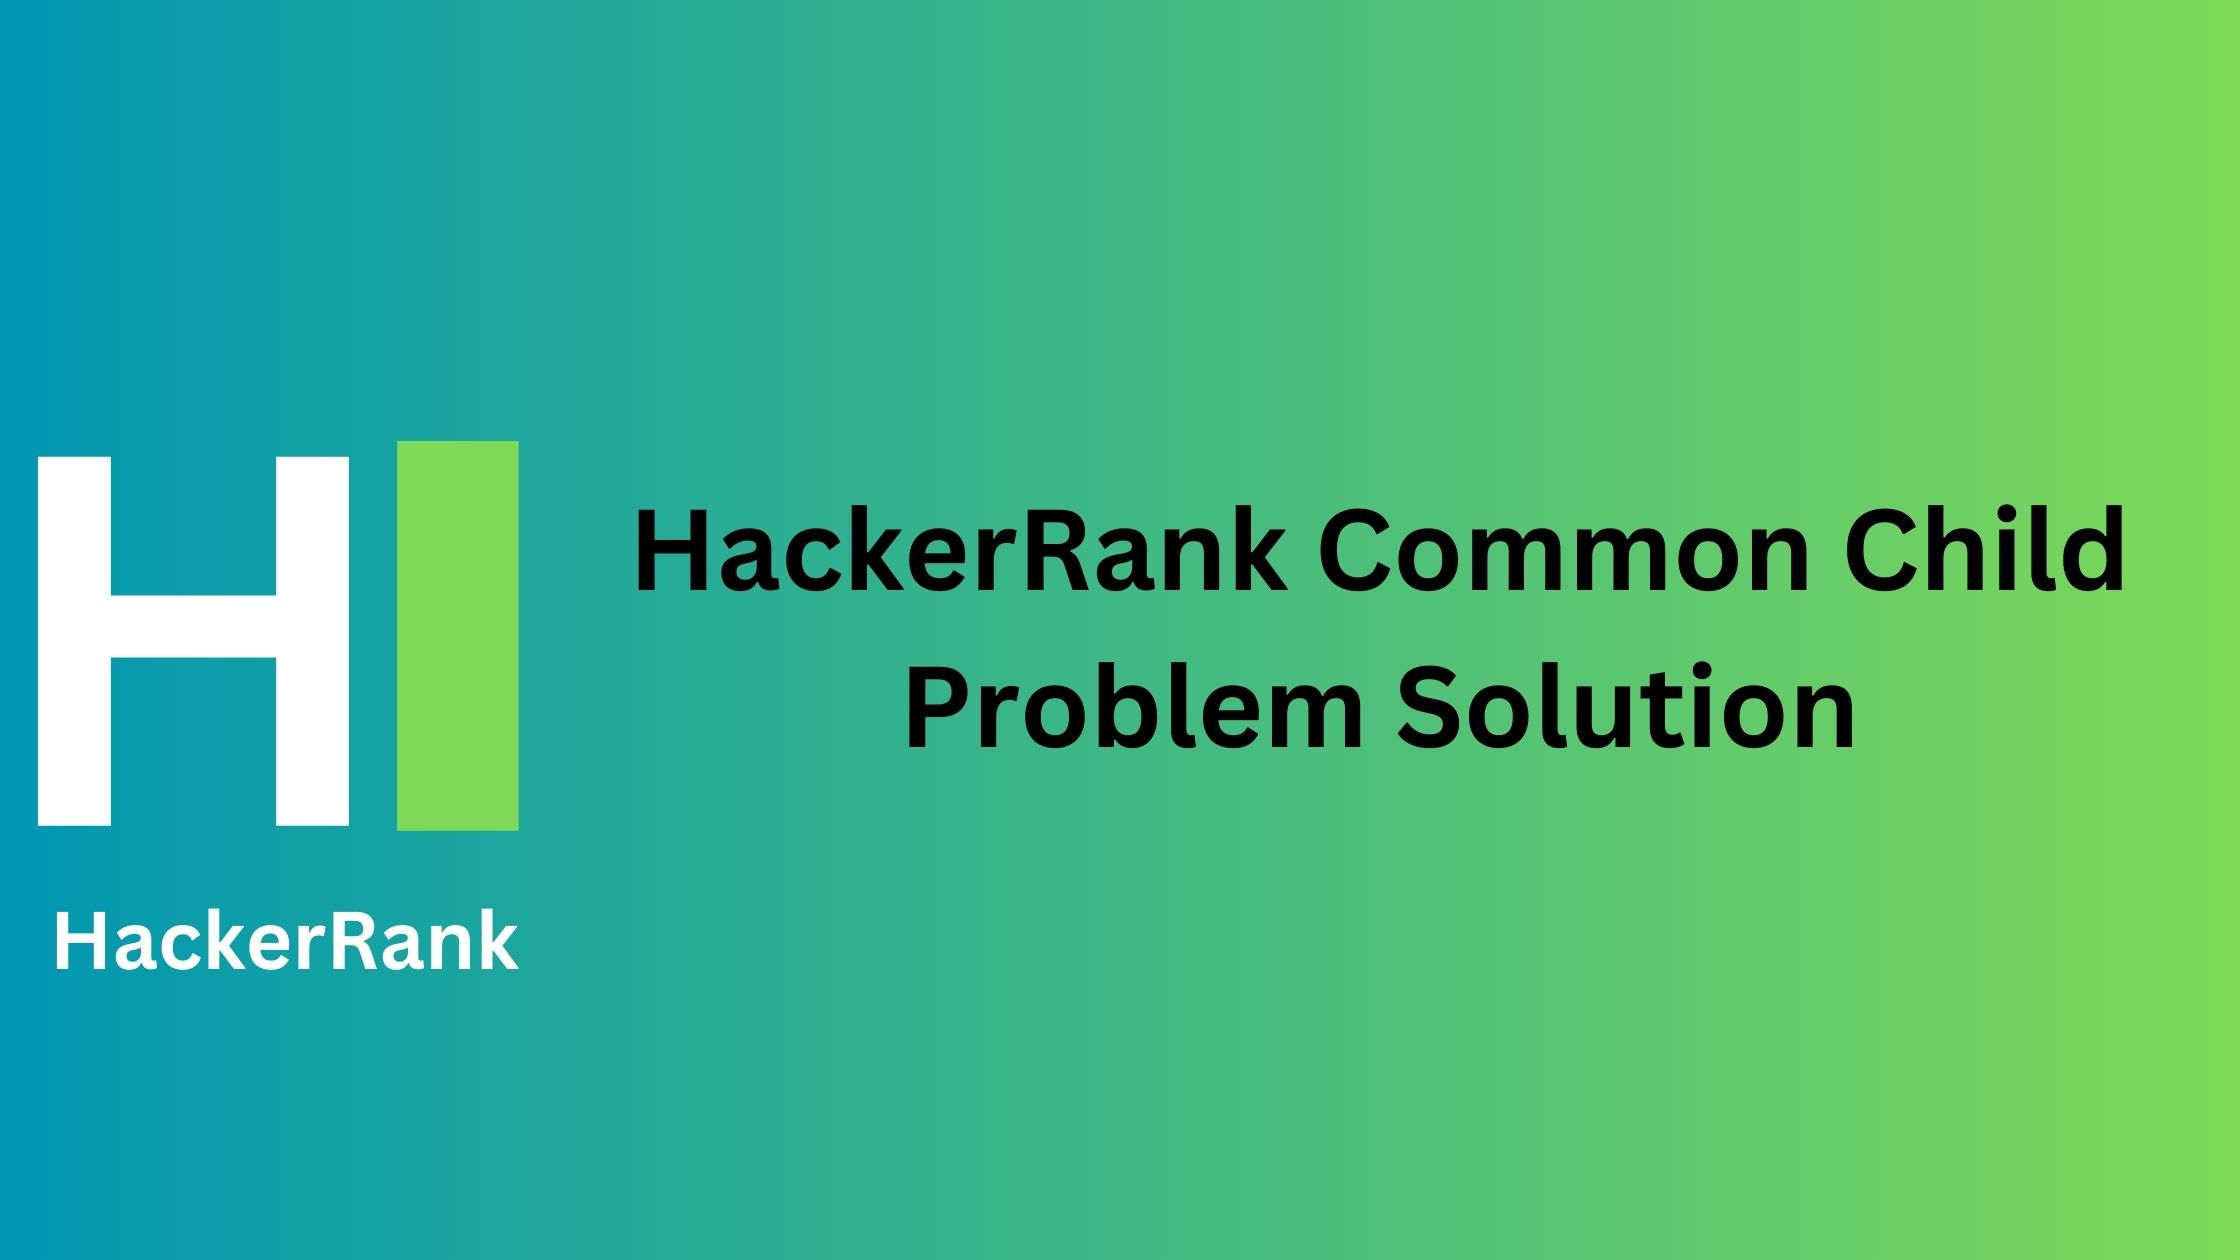 HackerRank Common Child Problem Solution